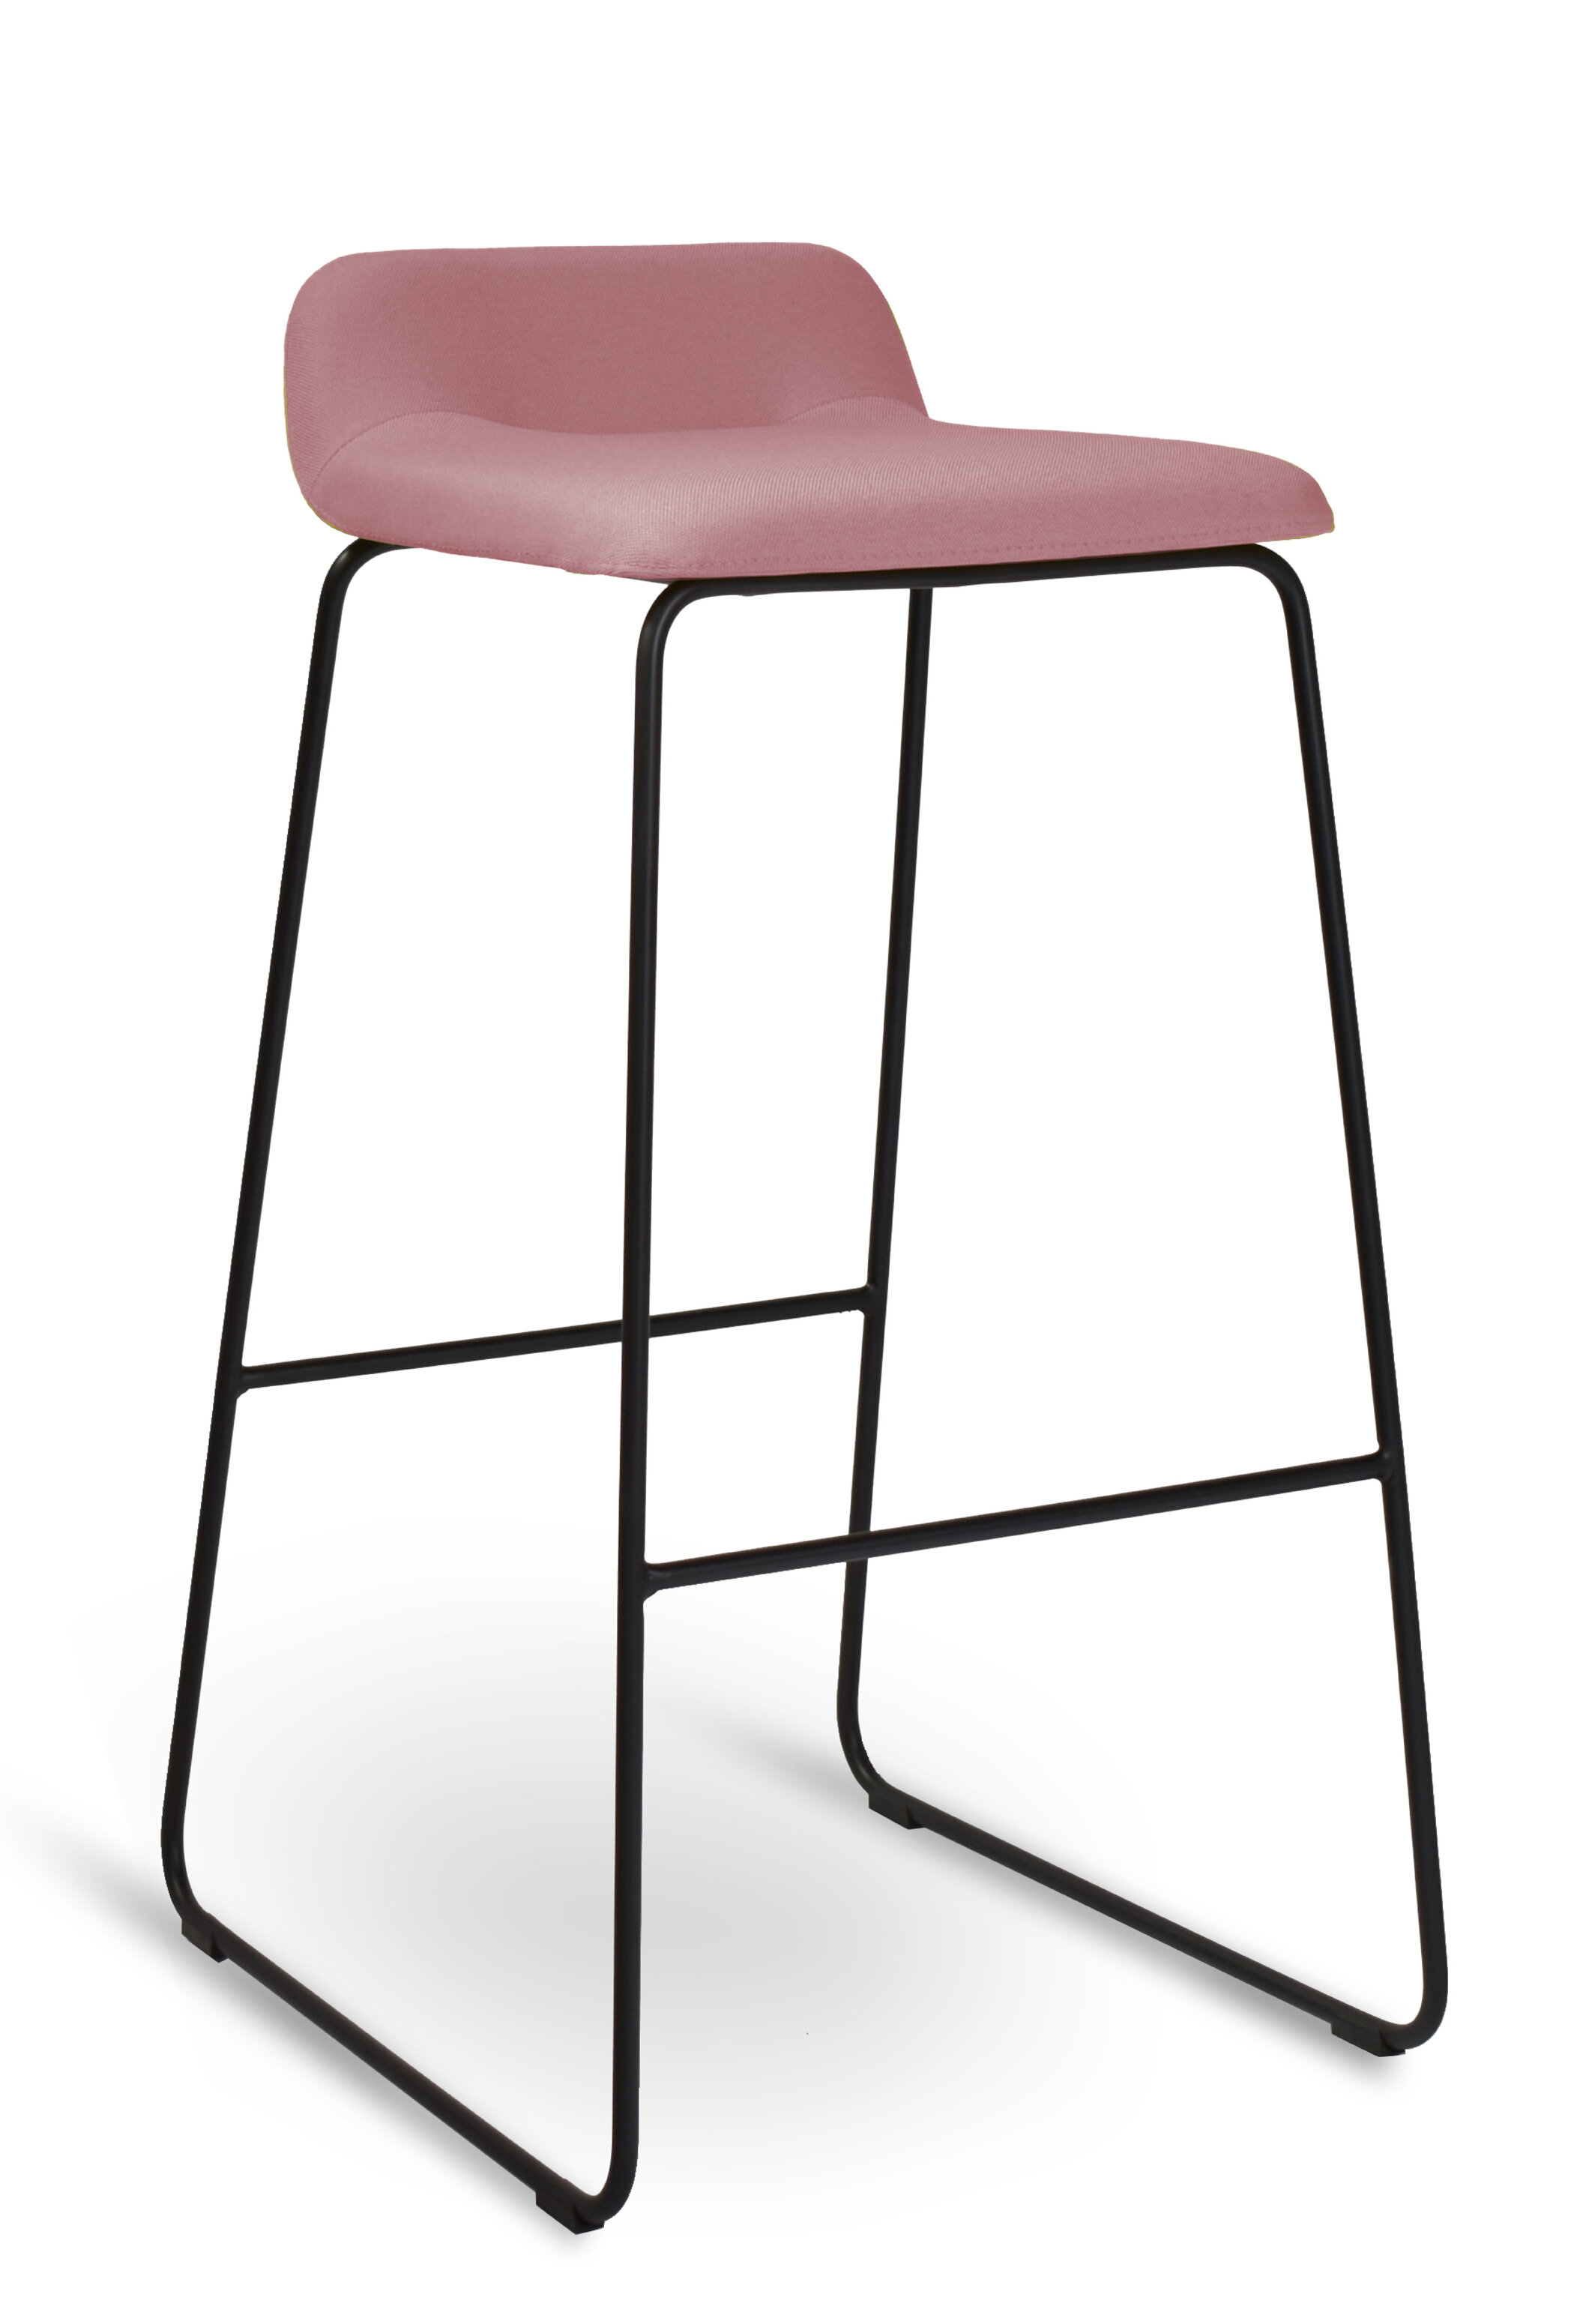 WS - Lolli high stool - ERA CSE24 DATE